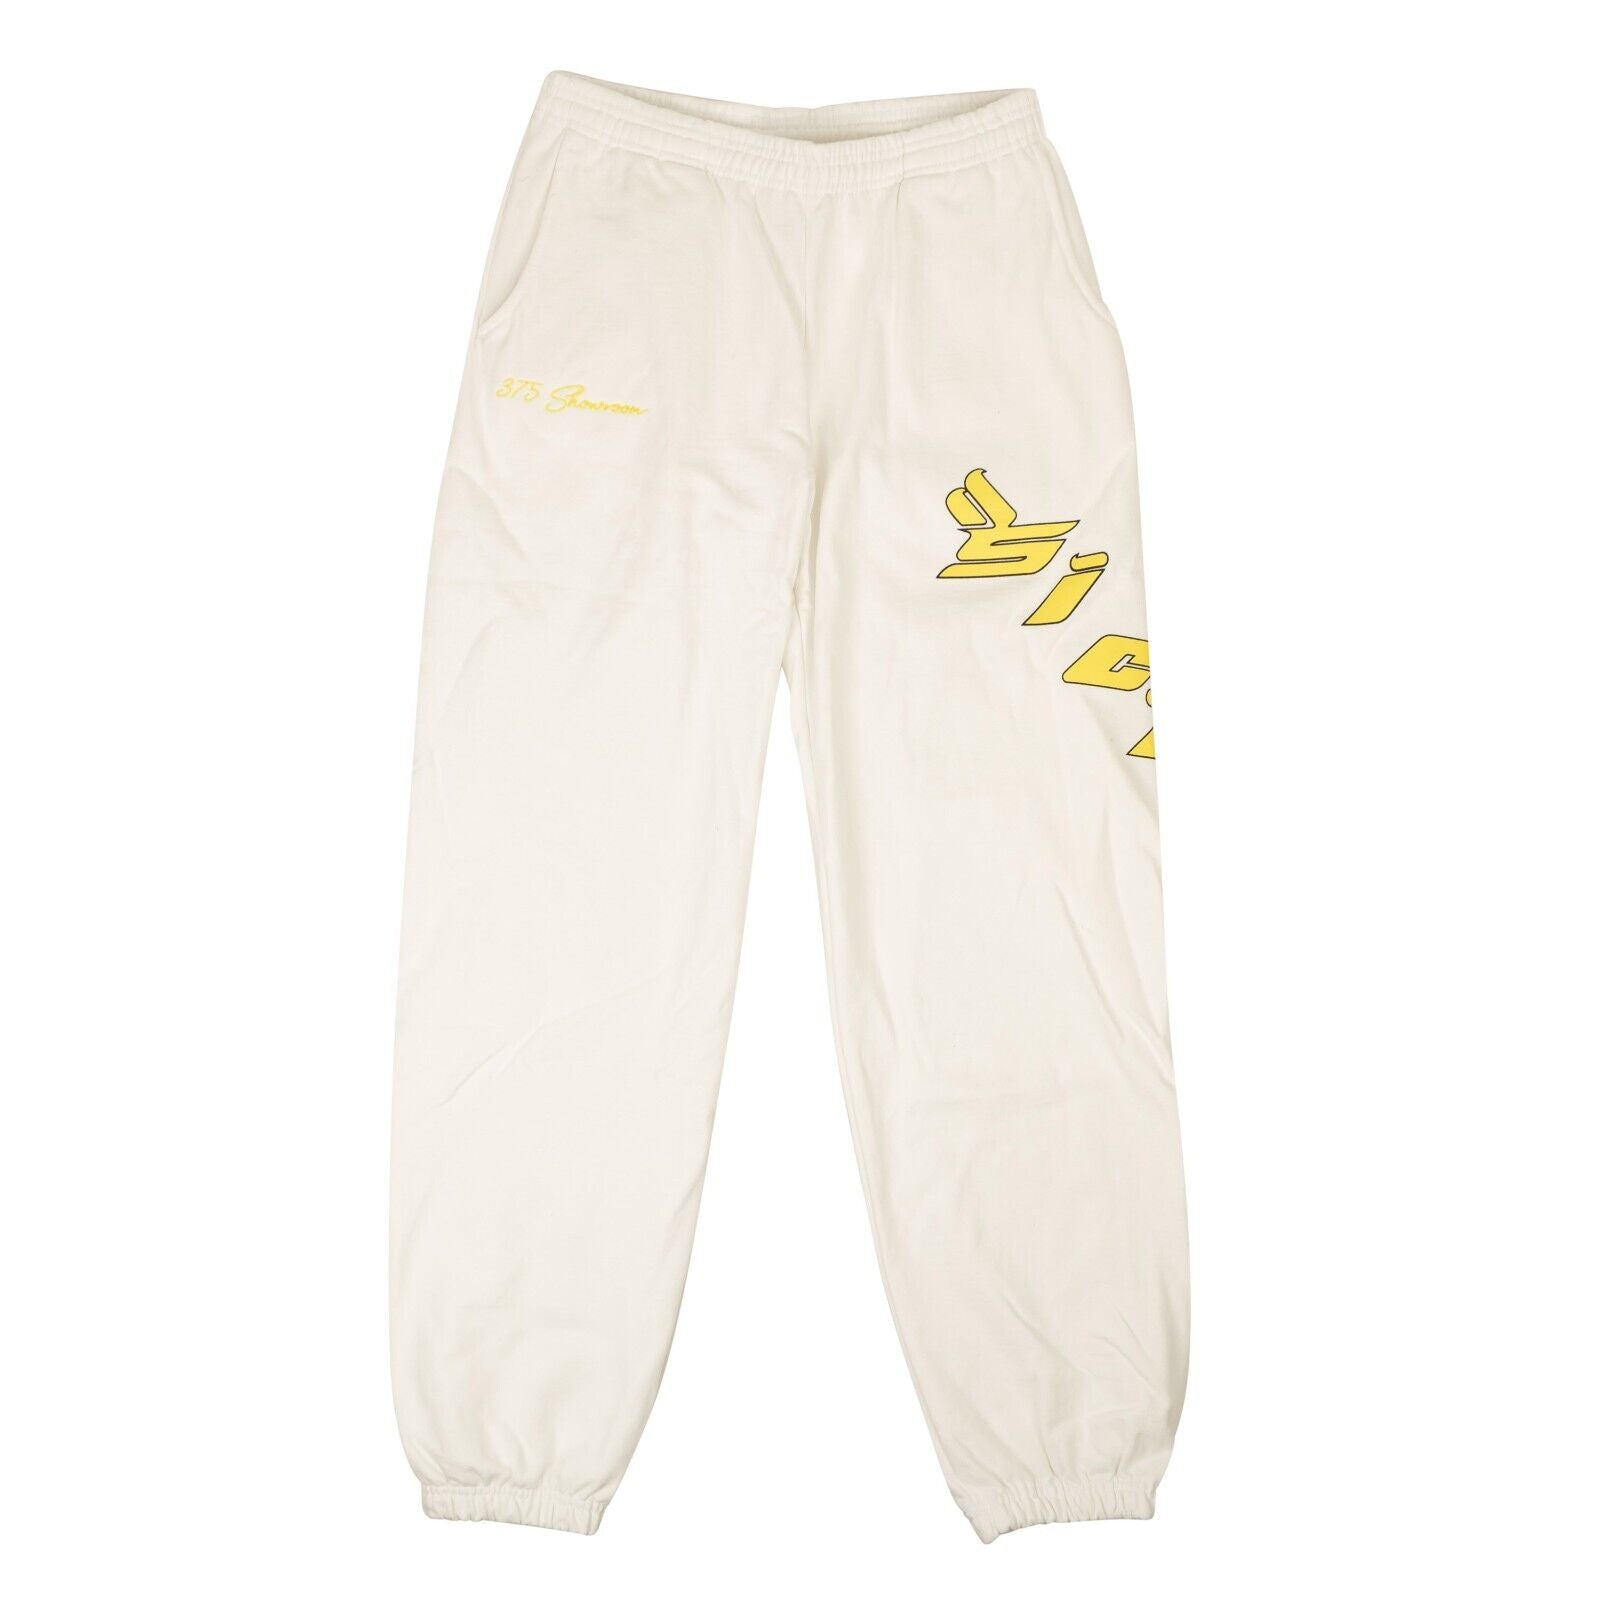 Sicko 'BornFromPain' Showroom Sweatpants White/Yellow